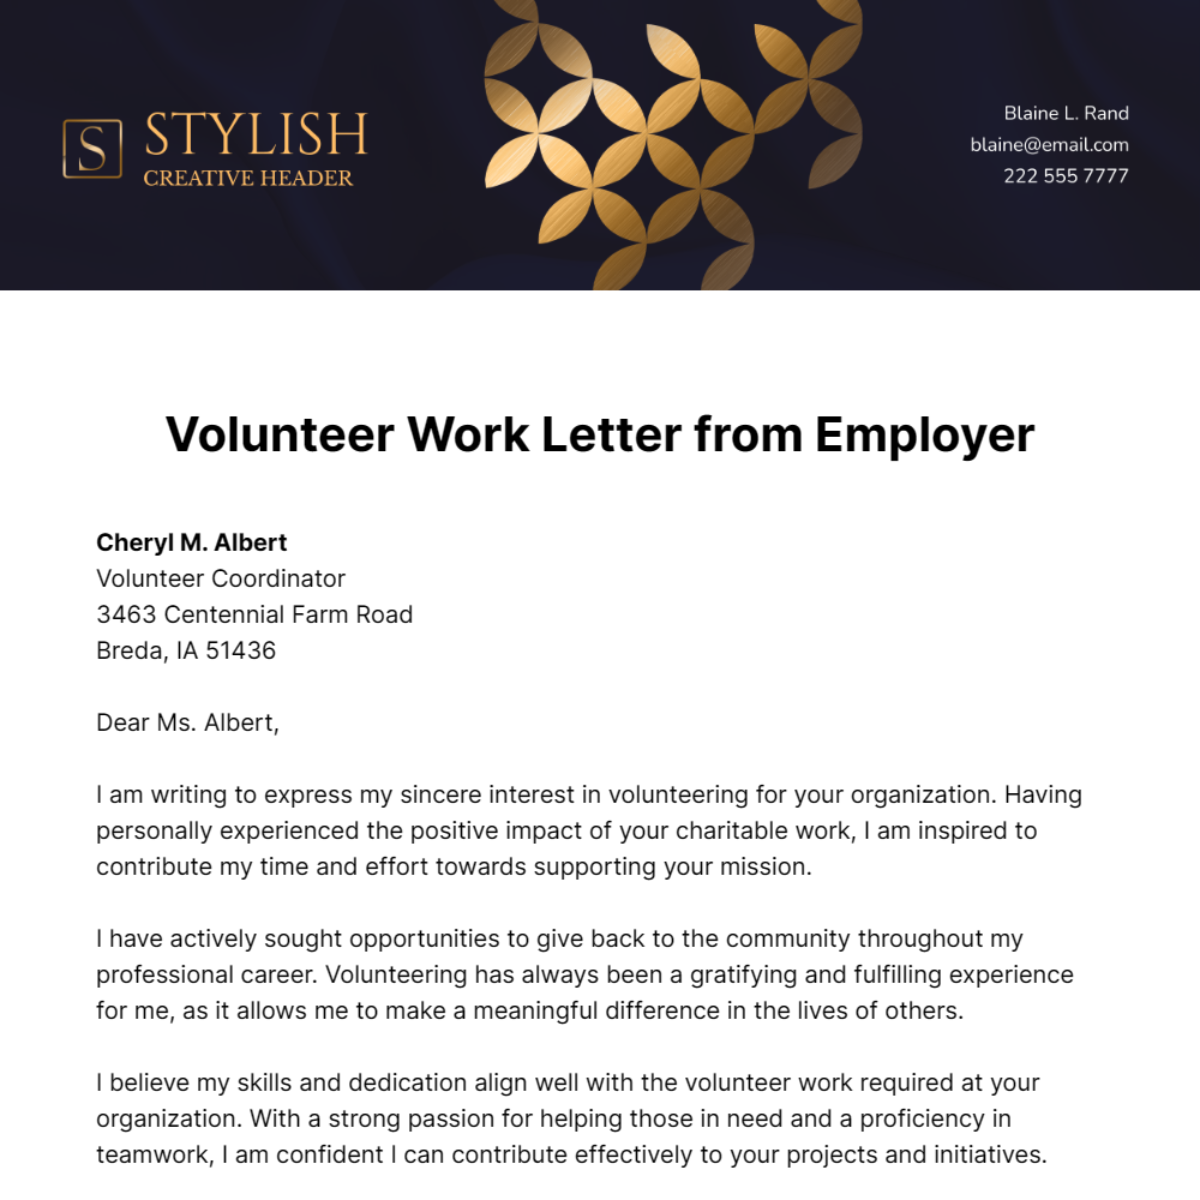 Volunteer Work Letter from Employer Template